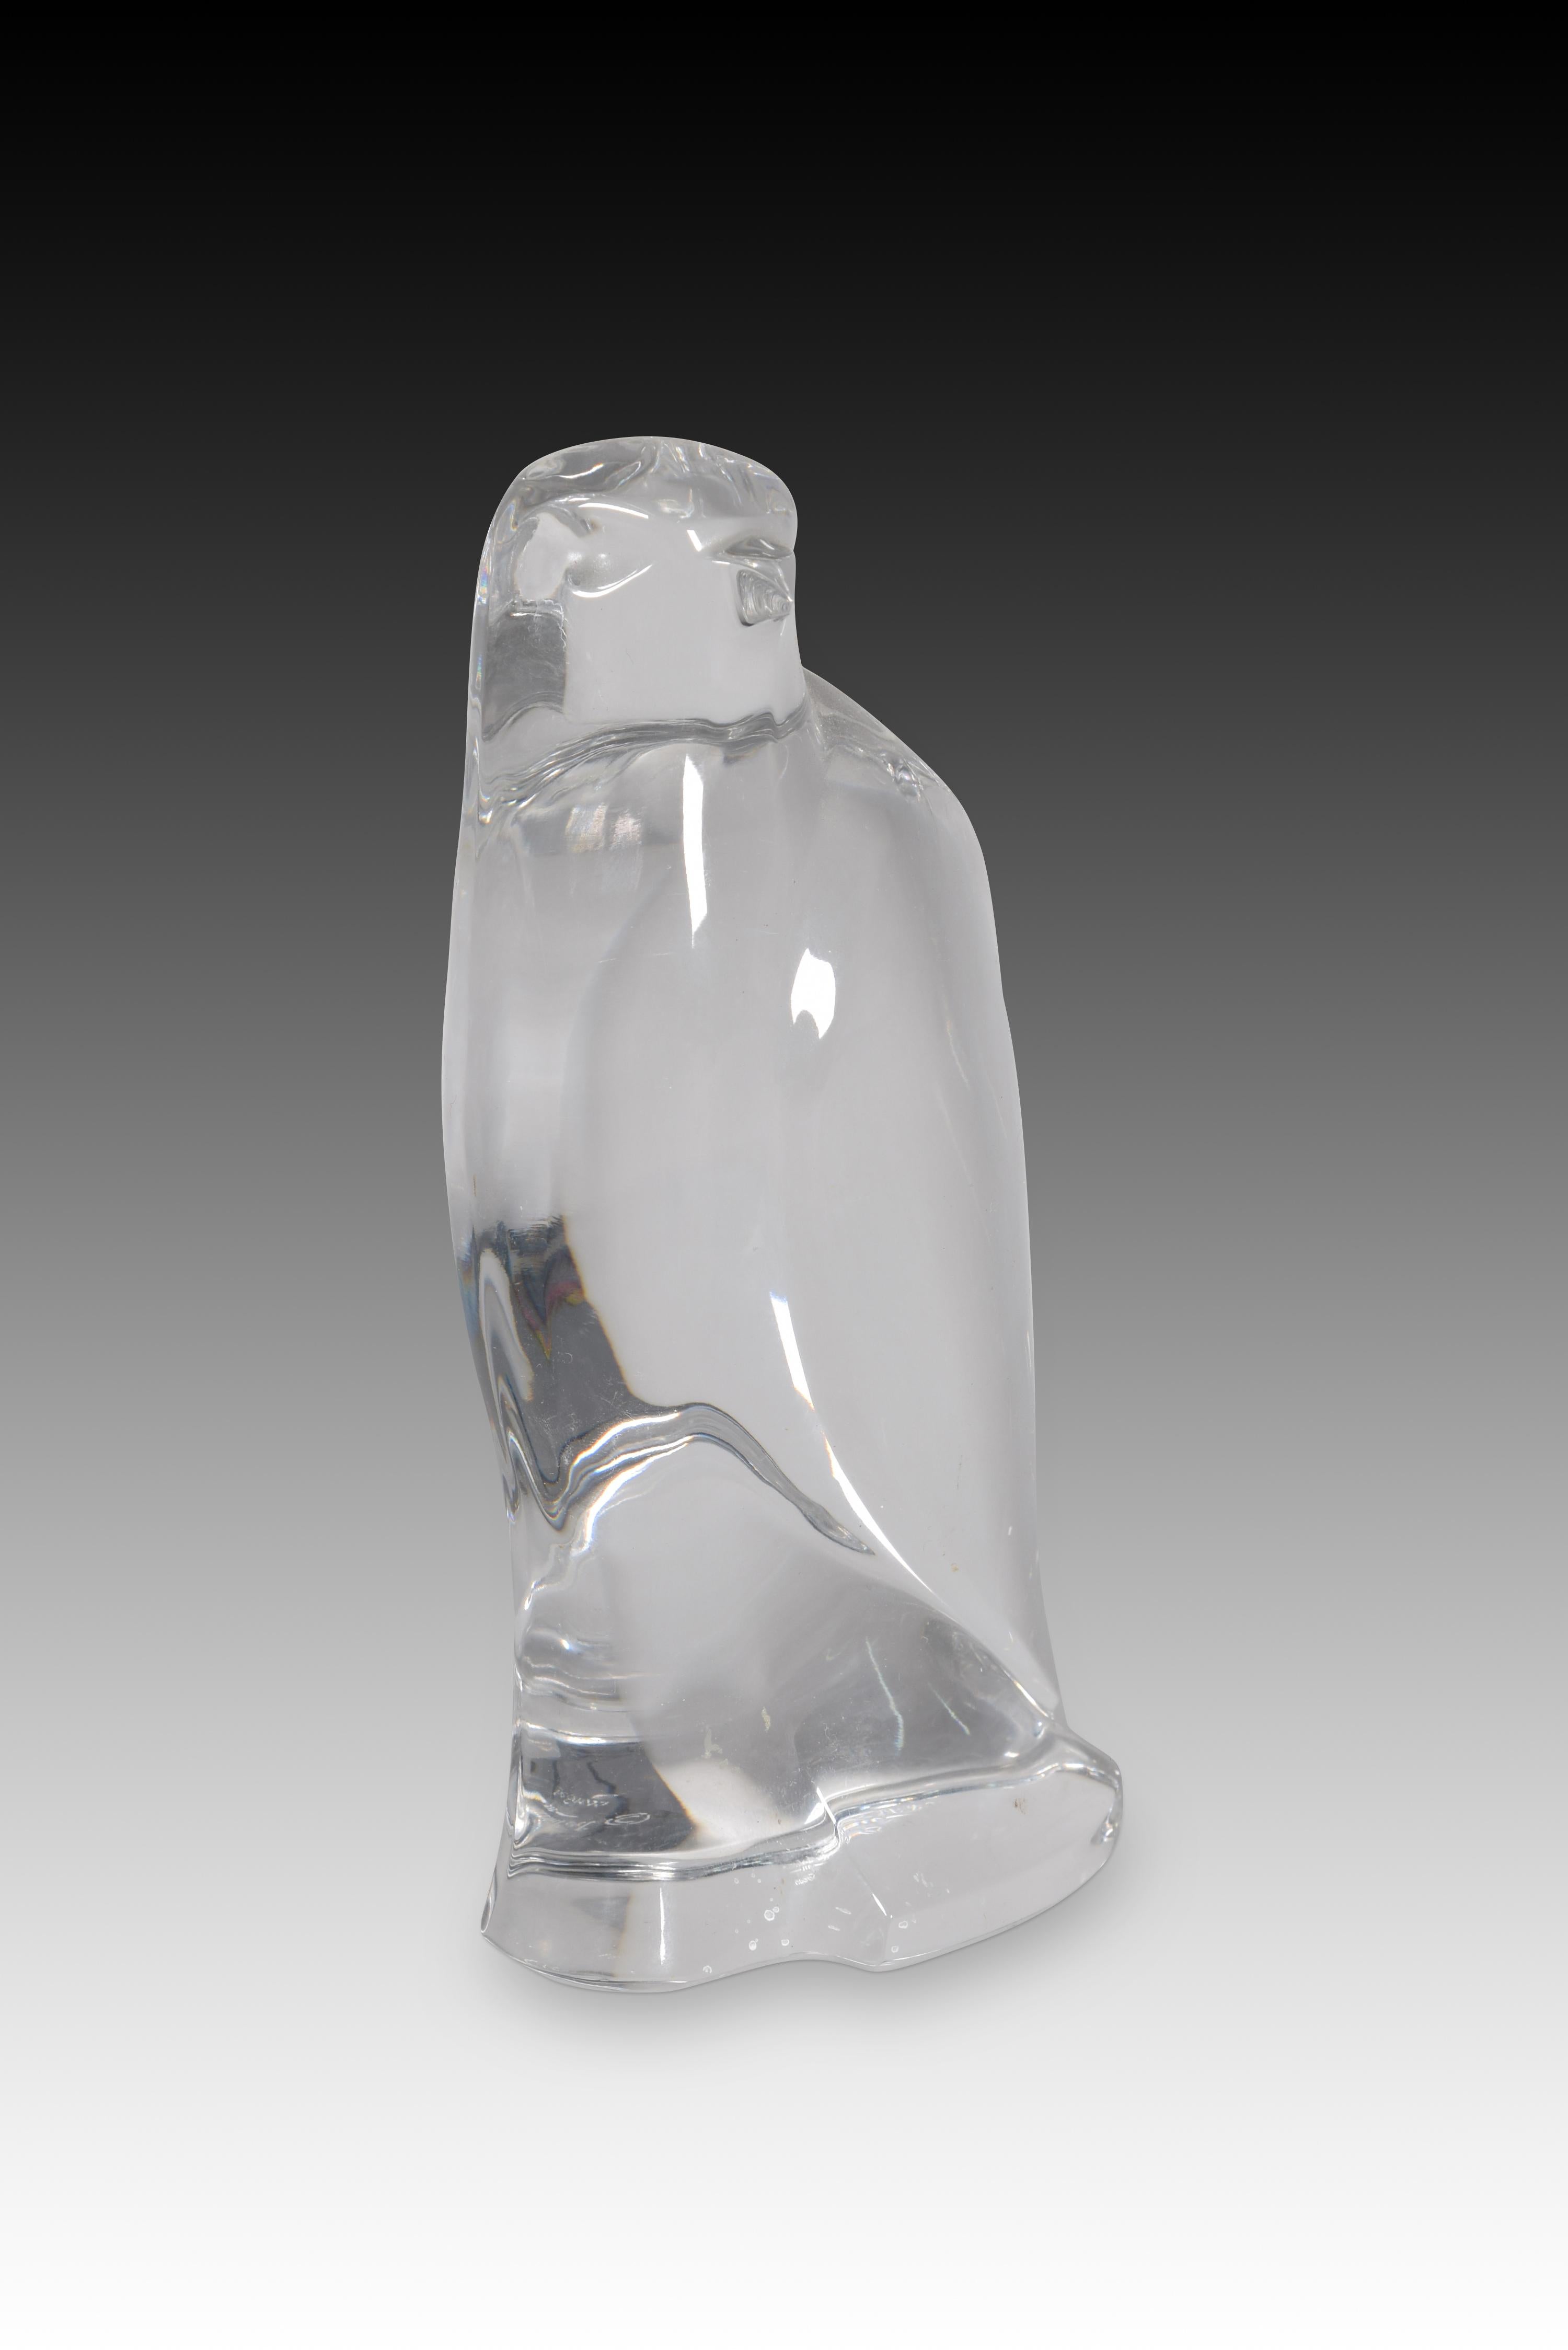 Hawk. Glass. Natchmann, Germany, 20th century. 
Perched falcon figure, made of translucent glass. Natchmann (FX Nachtmann Bleikristallwerke GmbH) is a still active fine glassware factory founded in 1834 by Michael Nachtmann in Unterhütte, Oberpfalz